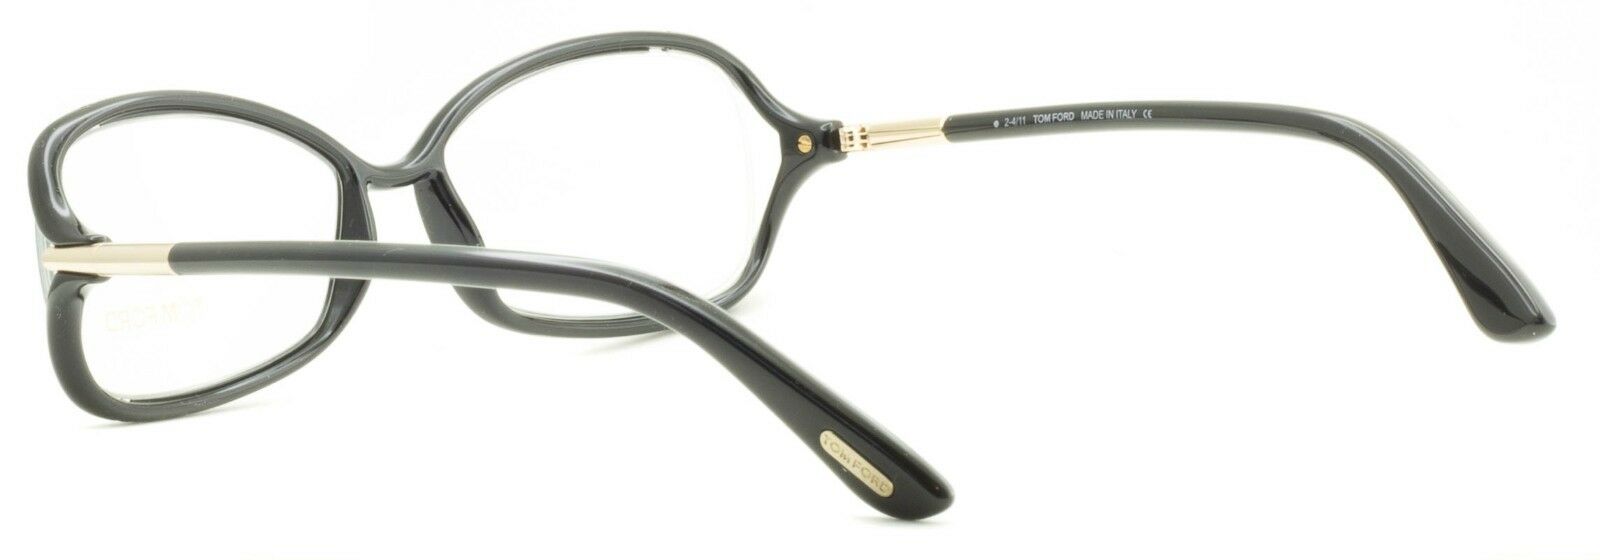 TOM FORD TF 5206 005 Eyewear FRAMES RX Optical Eyeglasses Glasses Italy - New